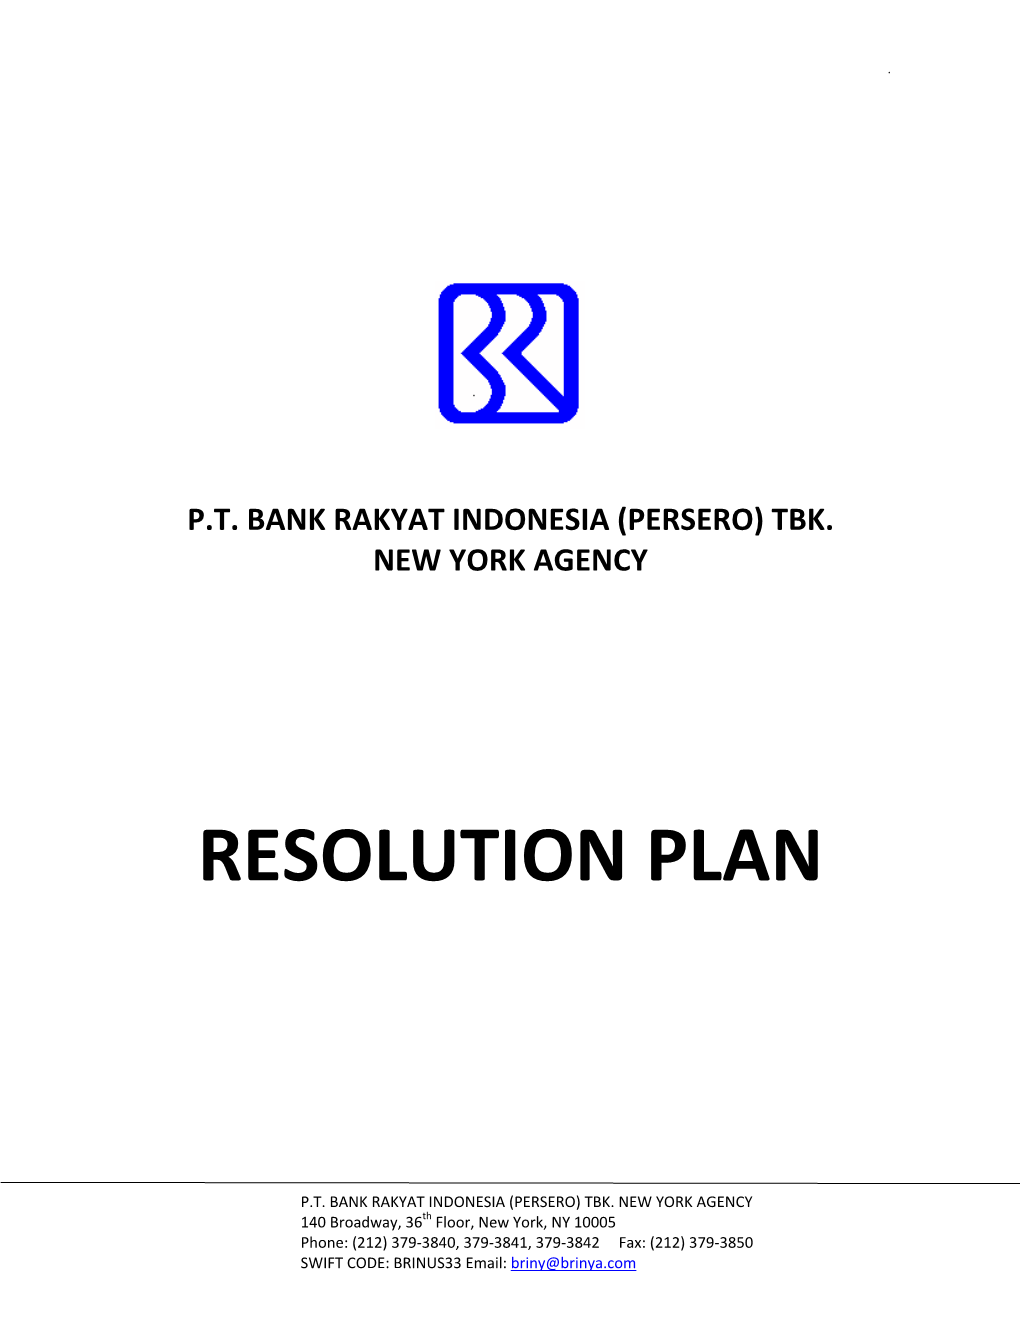 Resolution Plan